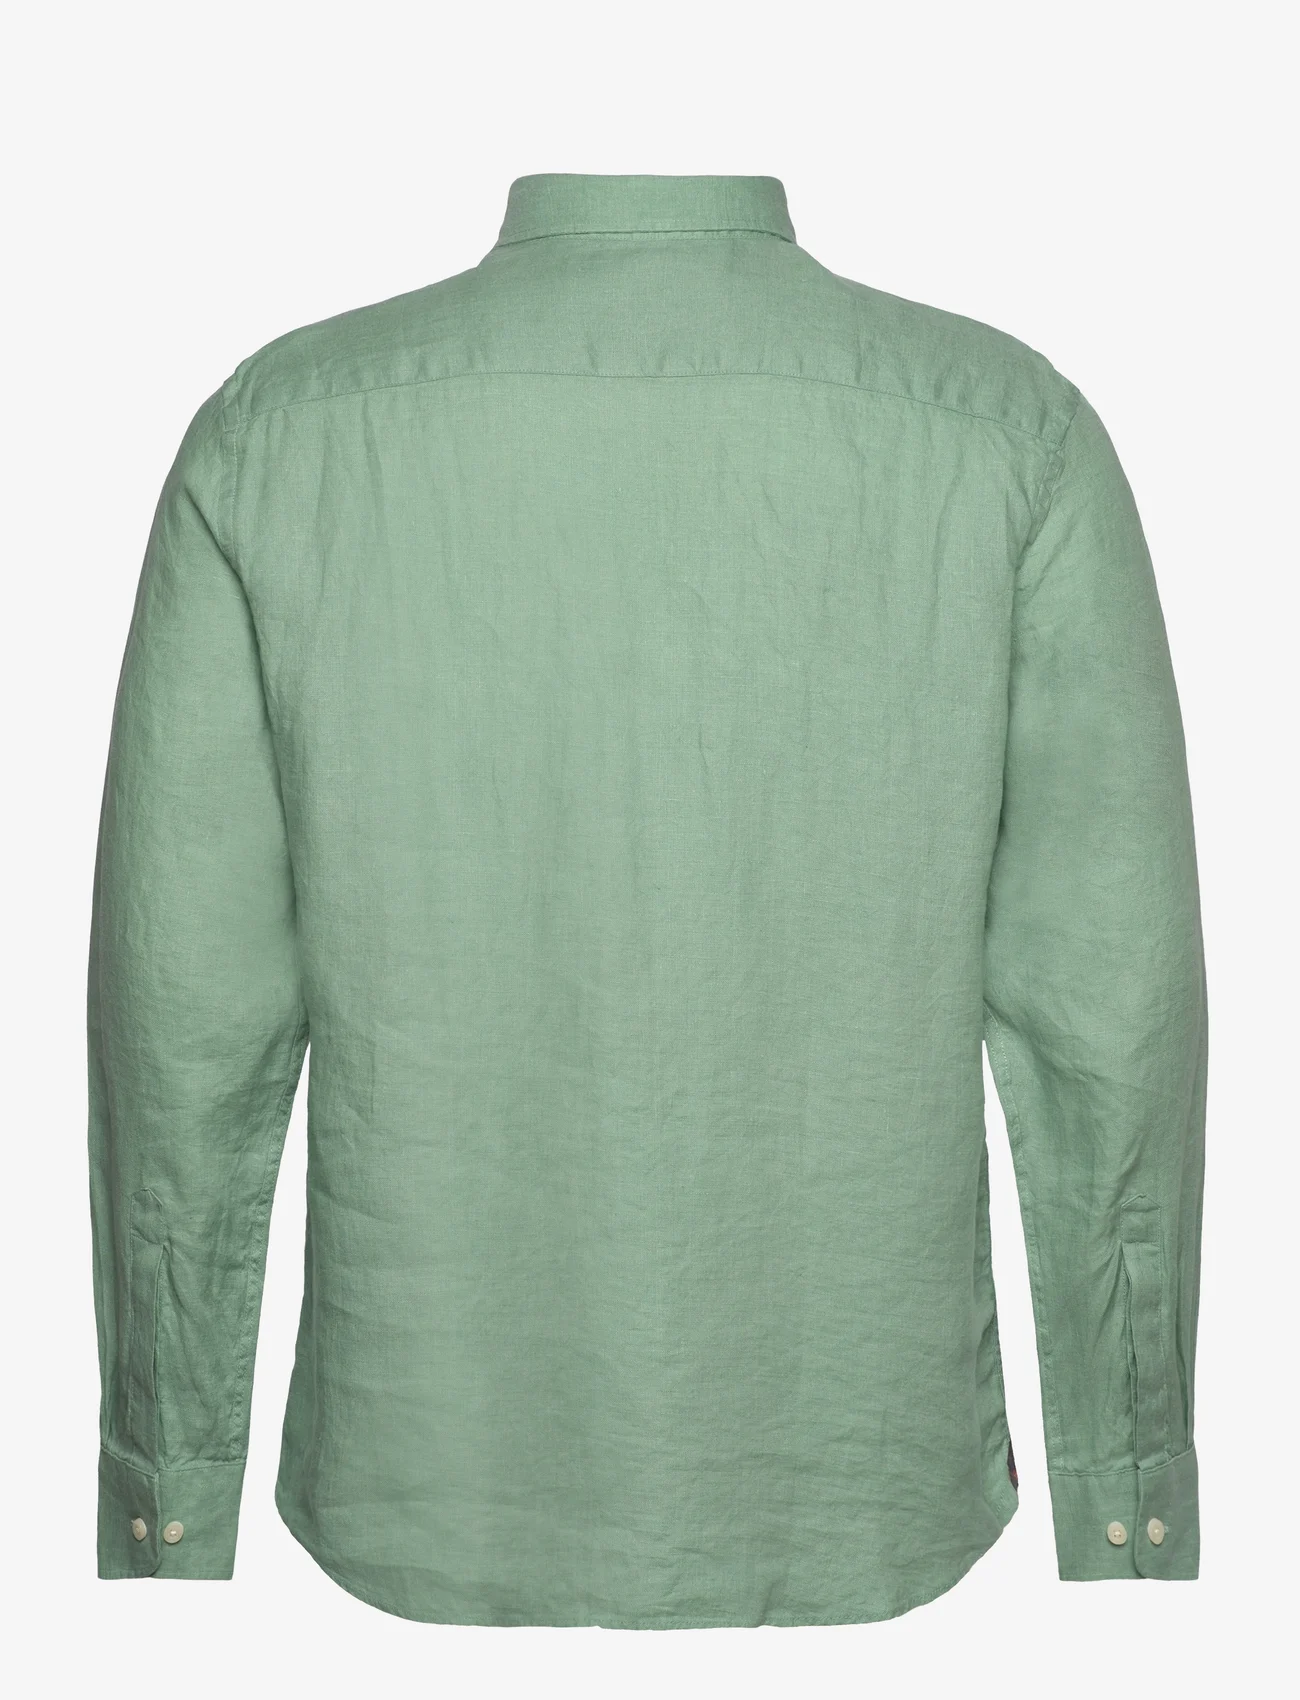 Morris - Douglas Linen Shirt-Classic Fit - basic skjortor - green - 1